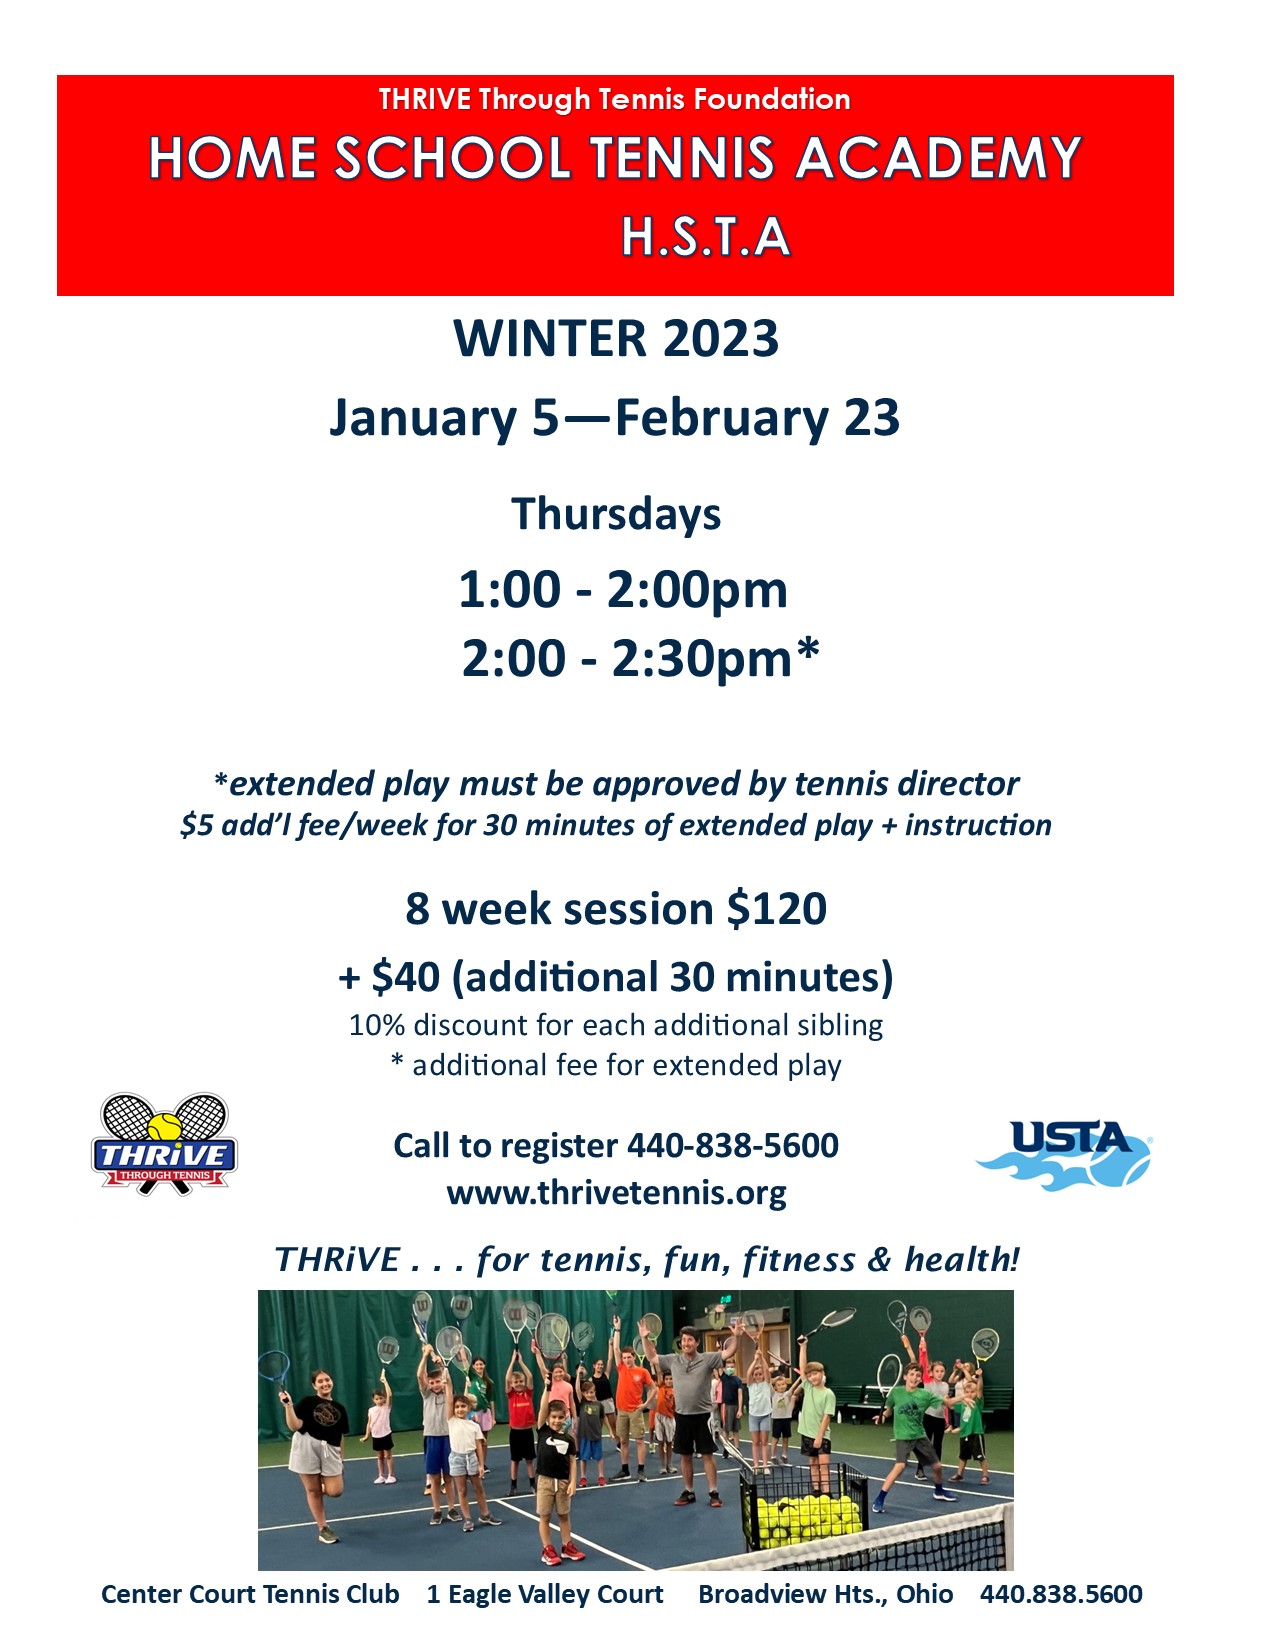 Home School USTA program at THRIVE Tennis at the Center Court Tennis Club